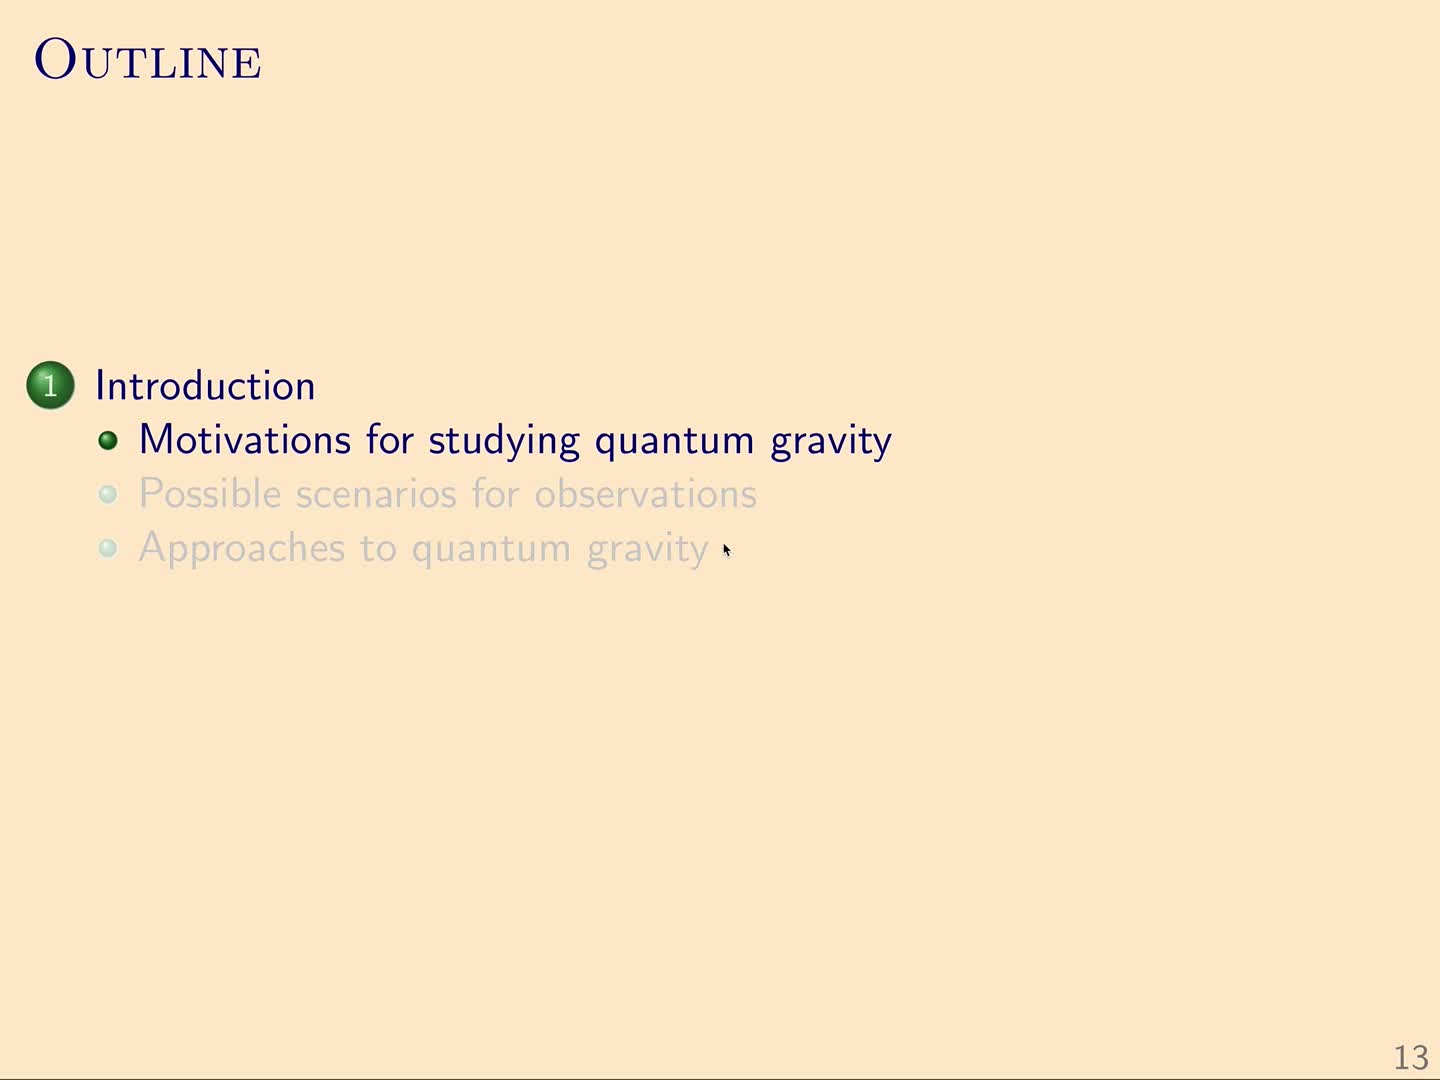 QG I: 1.1 - Motivations for studying quantum gravity